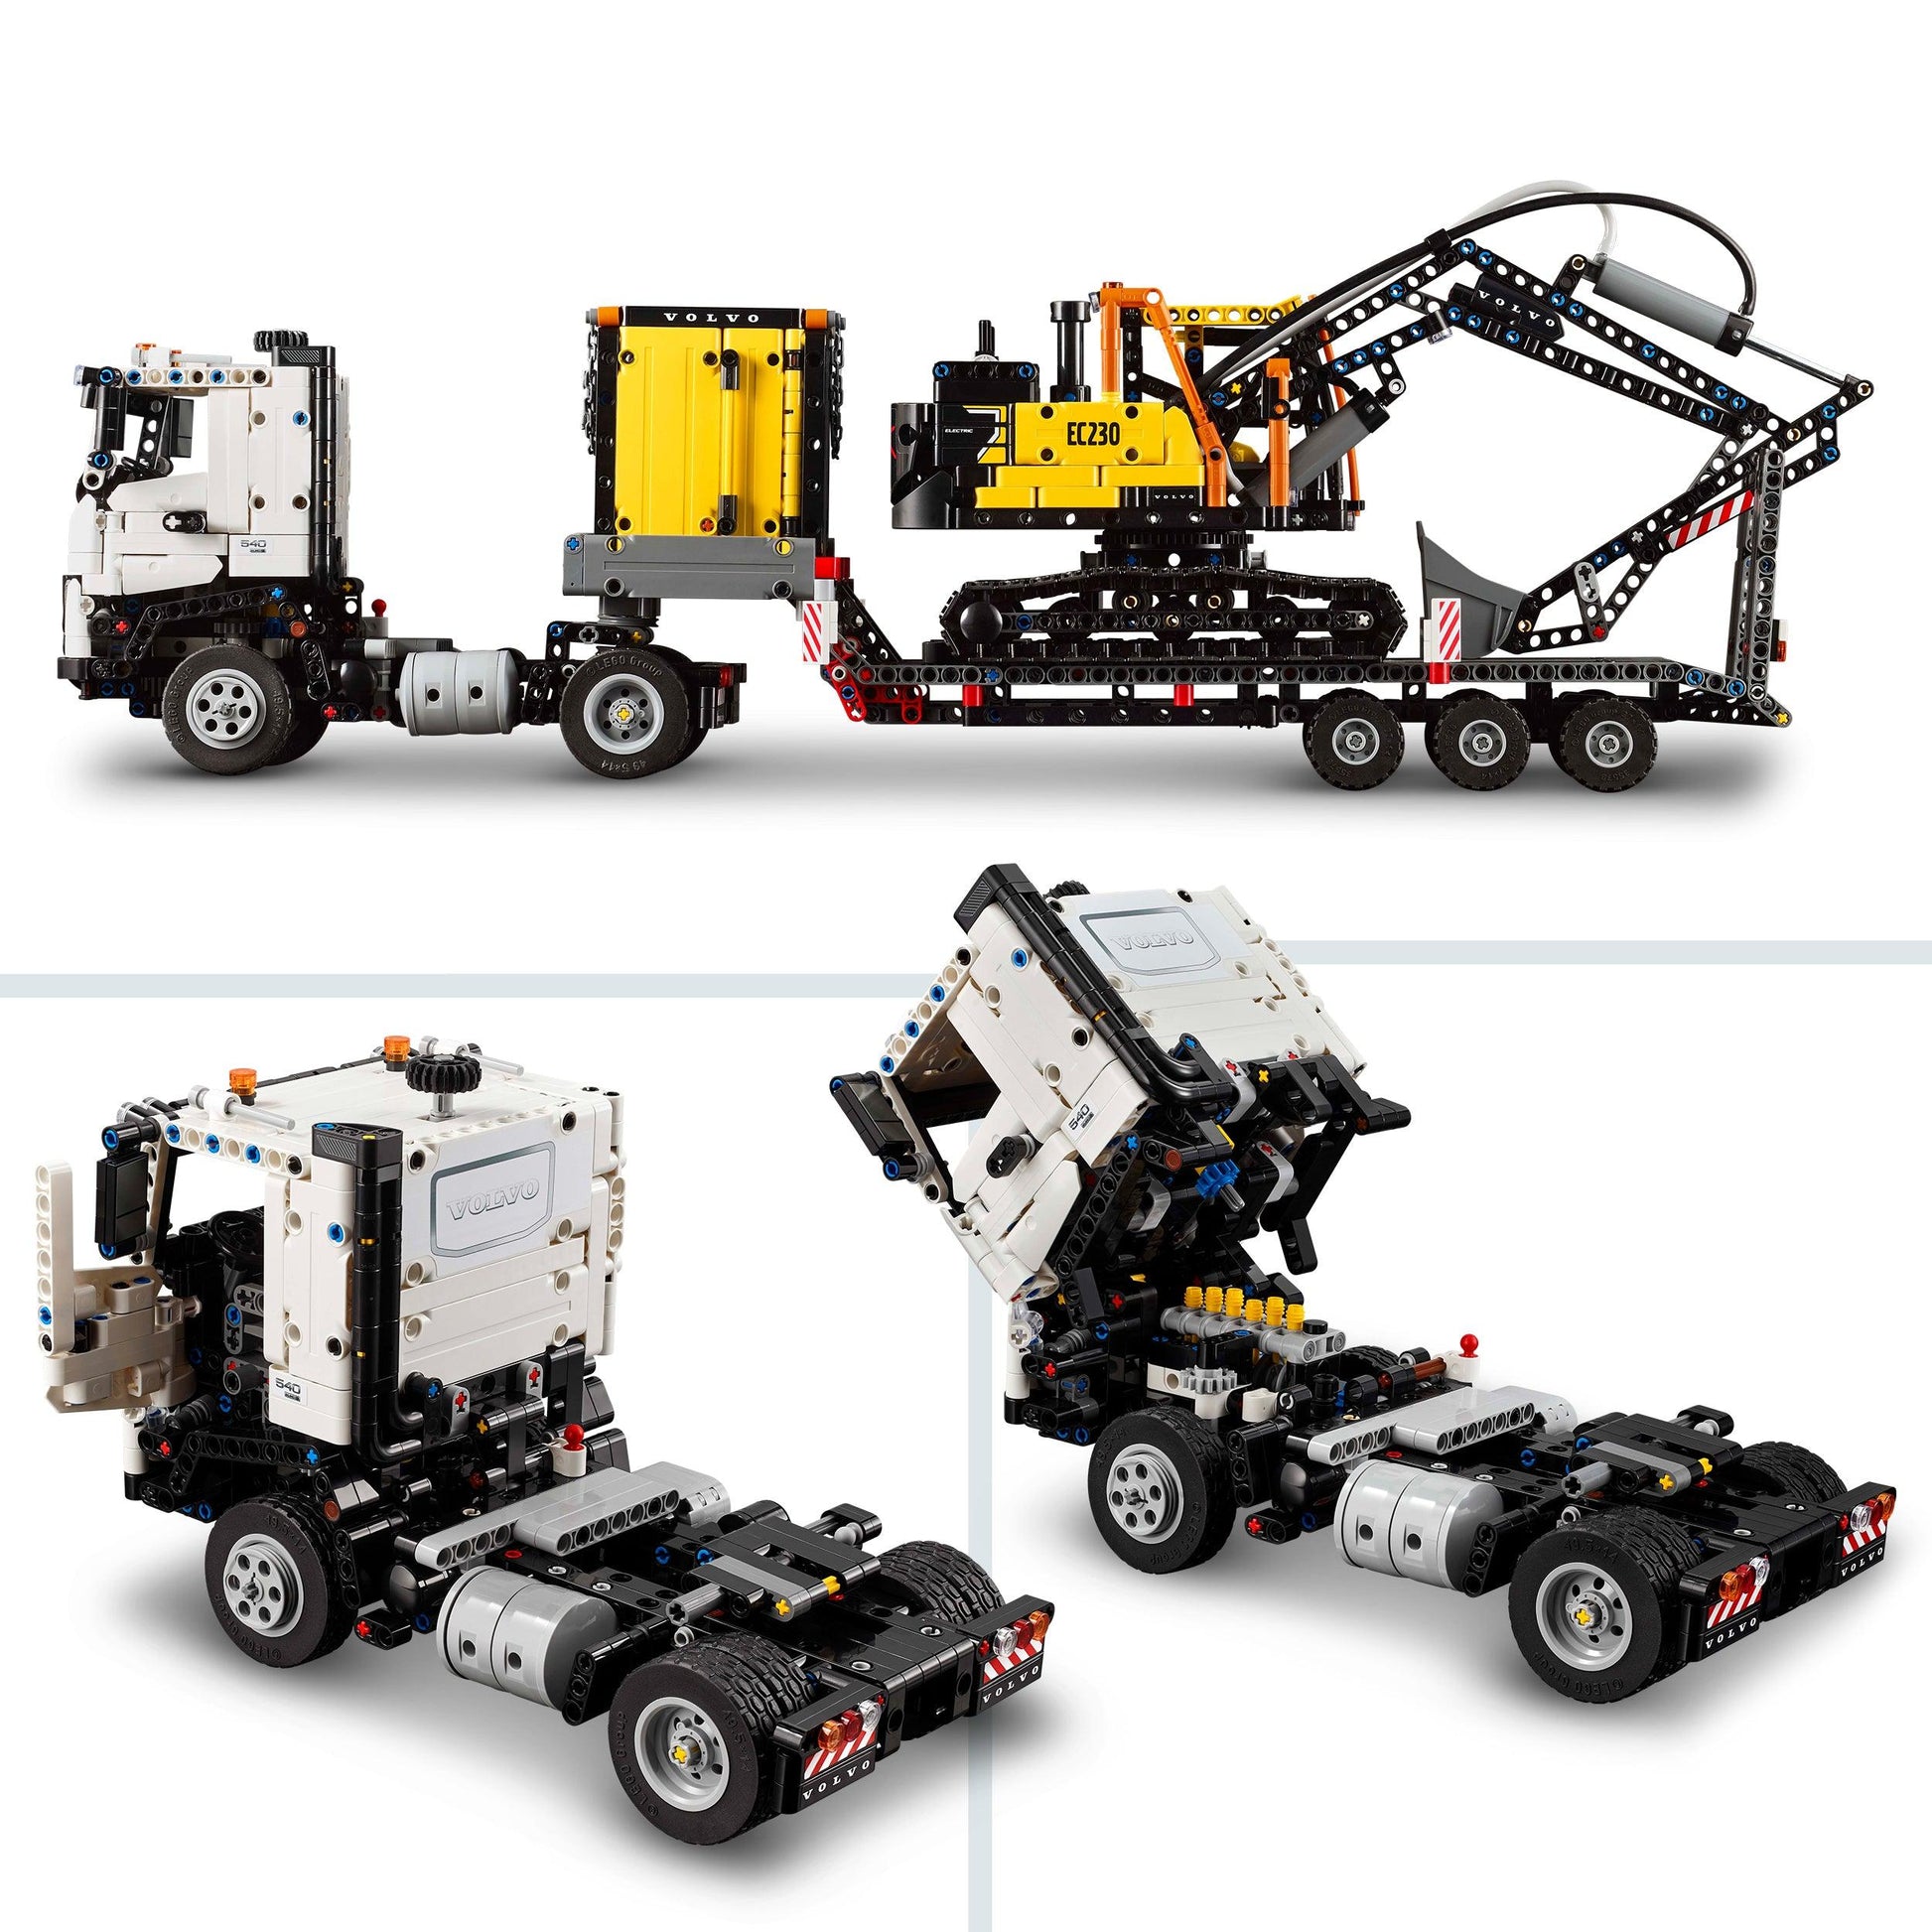 LEGO Volvo FMX truck & EC230 elektrische graafmachine 42175 Technic (Pre-Order: verwacht augustus) LEGO TECHNIC @ 2TTOYS LEGO €. 169.99